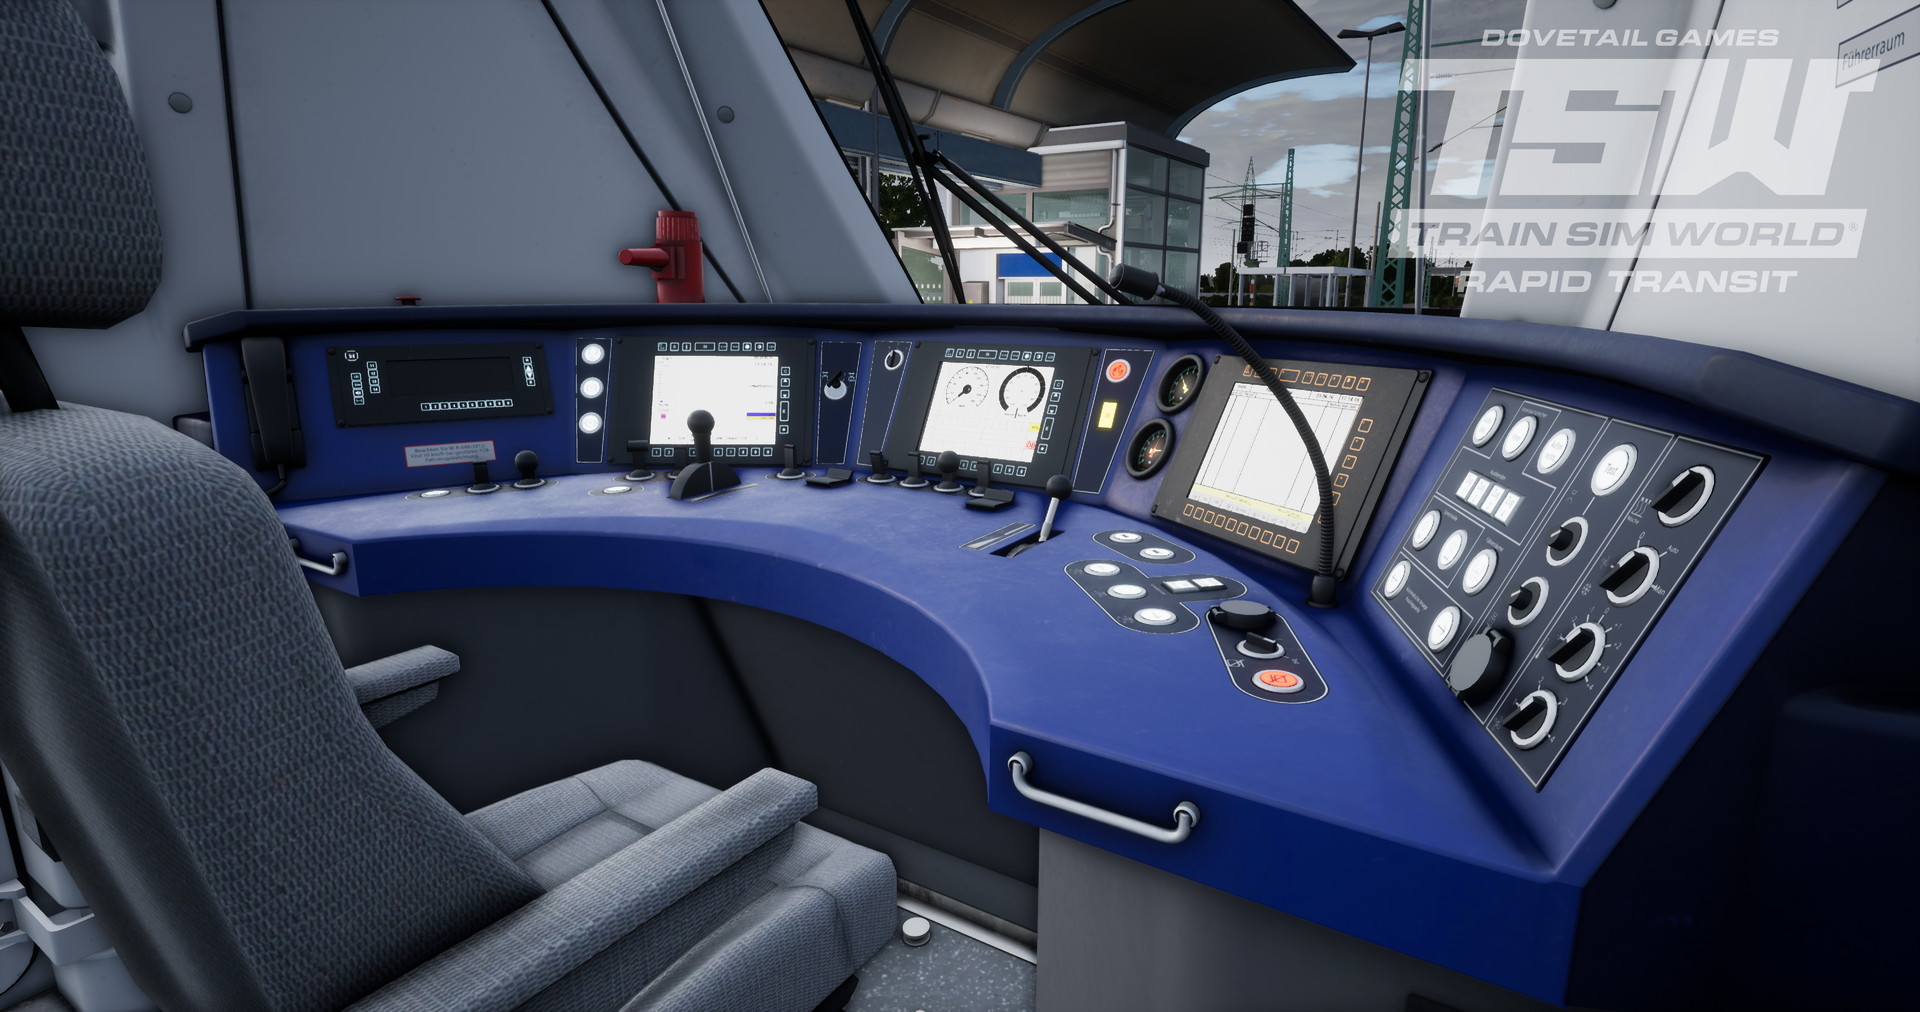 Train Sim World: Rapid Transit - screenshot 2